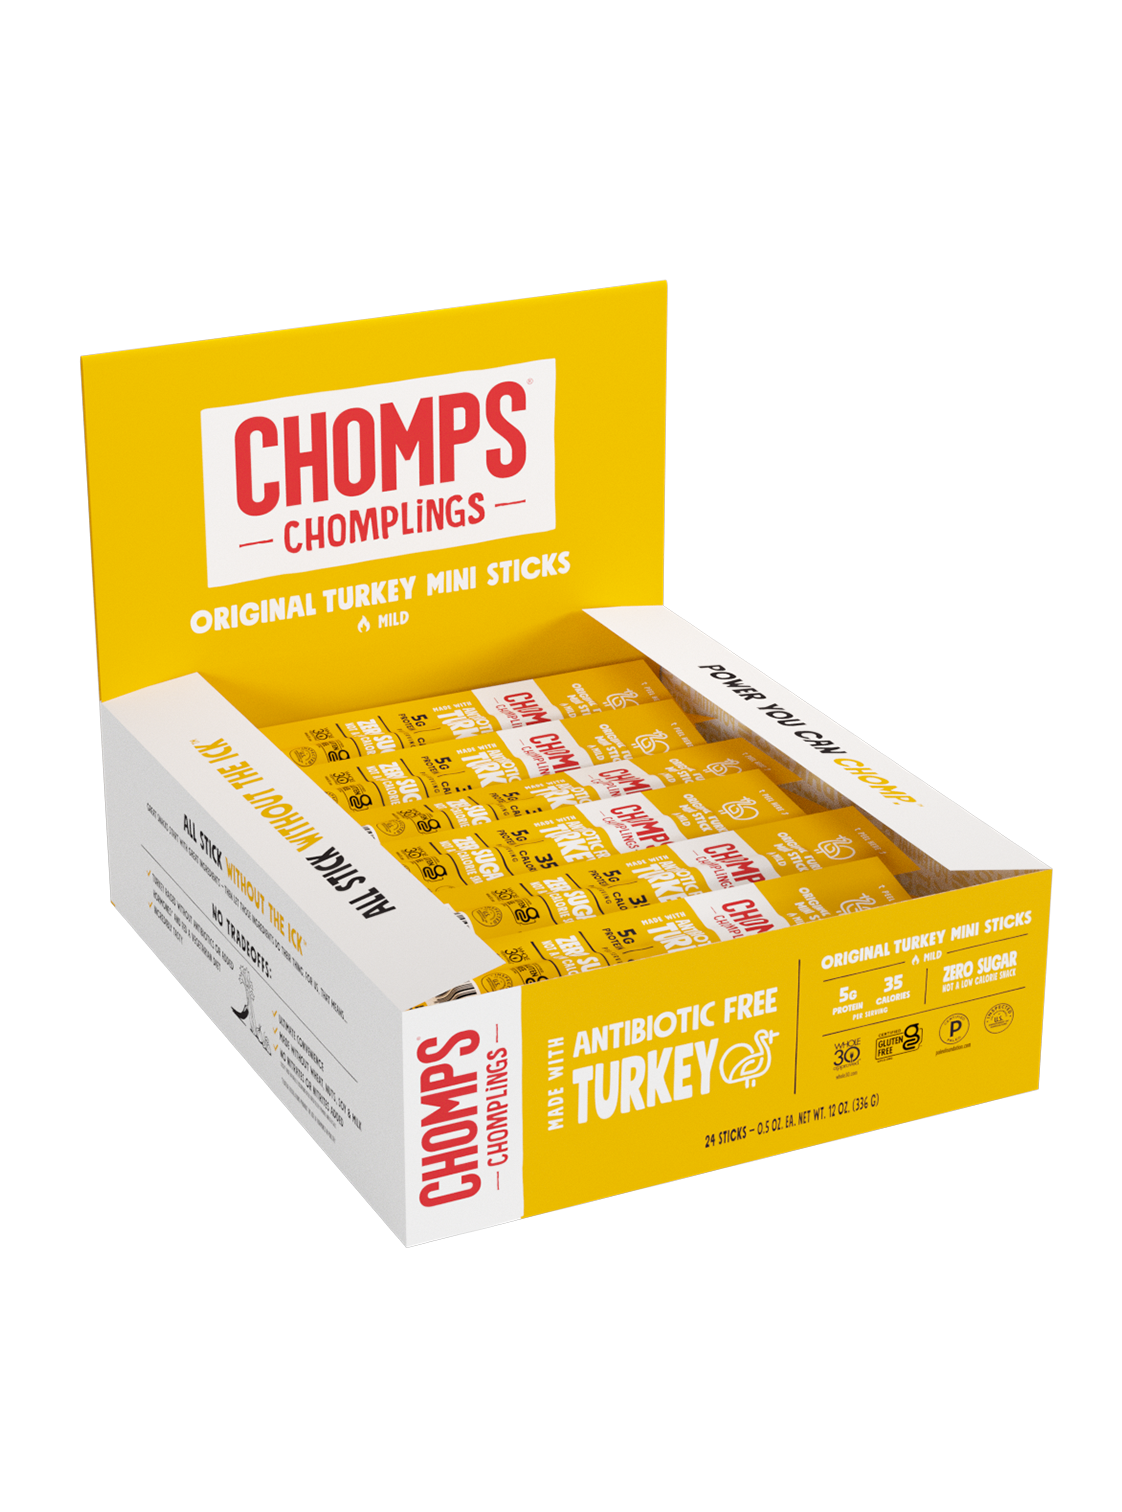 Original Turkey Chomplings